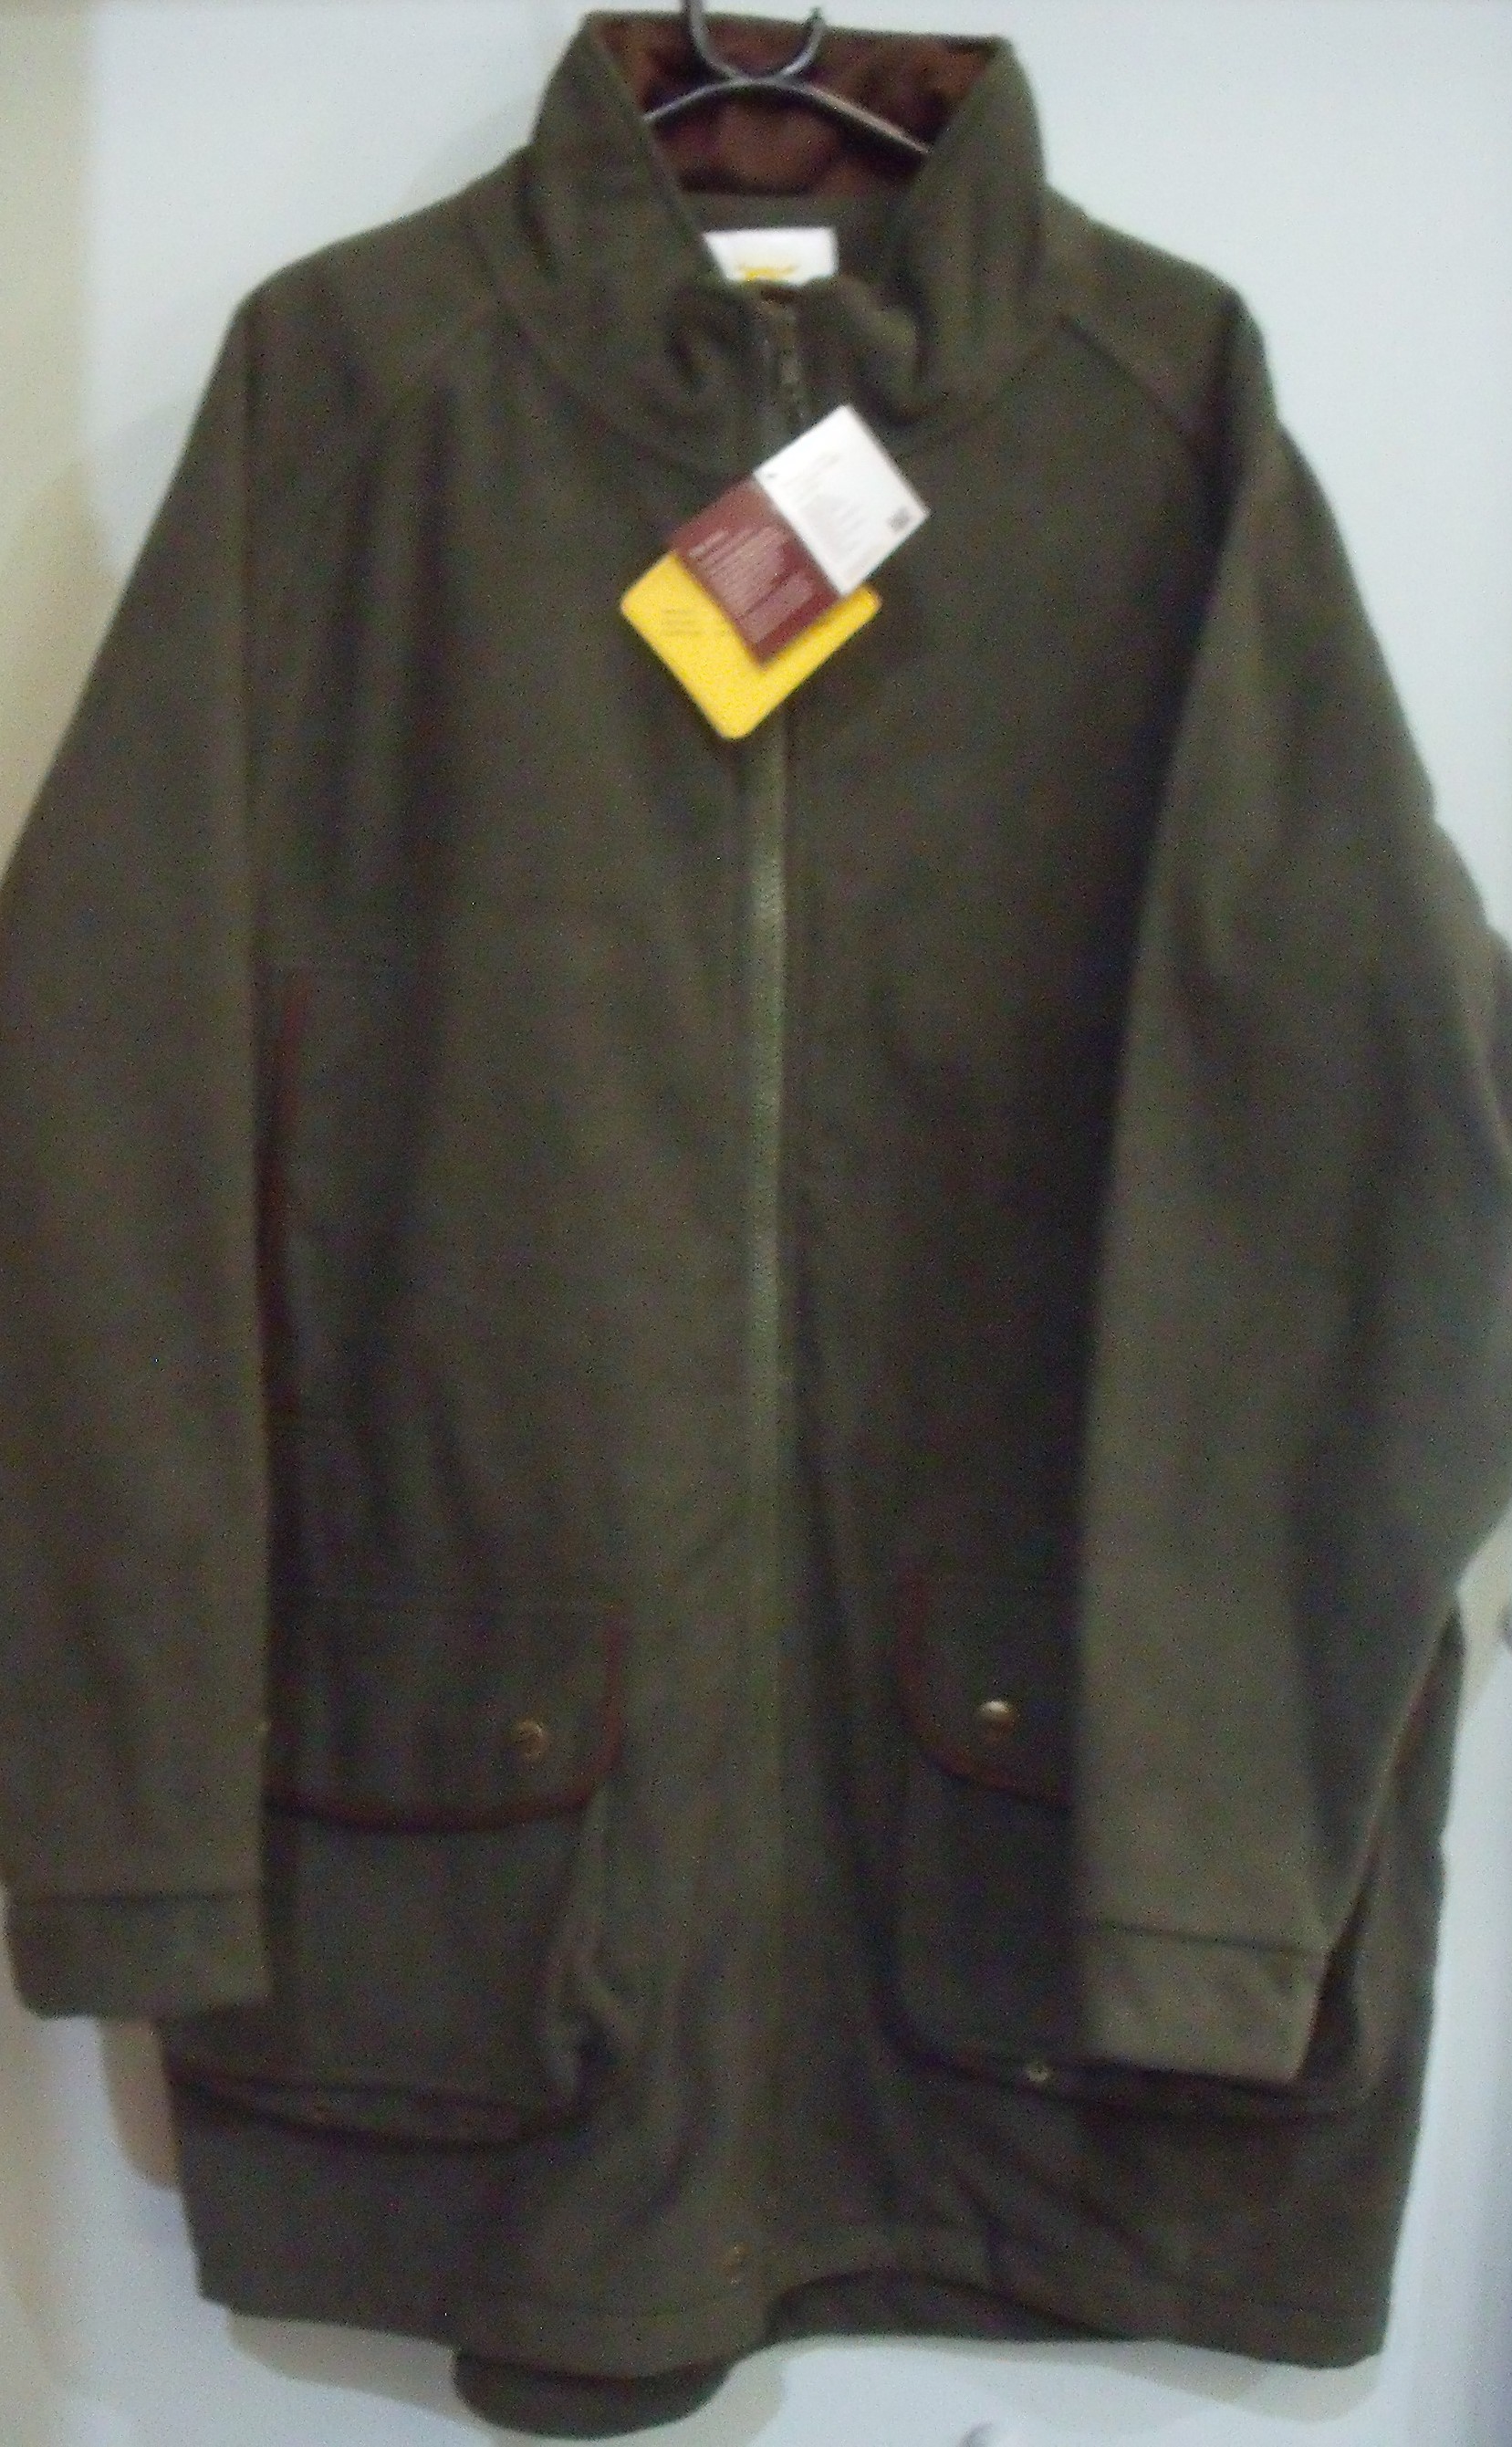 Brand new ex-shop stock Bonart waterproof jacket - size L